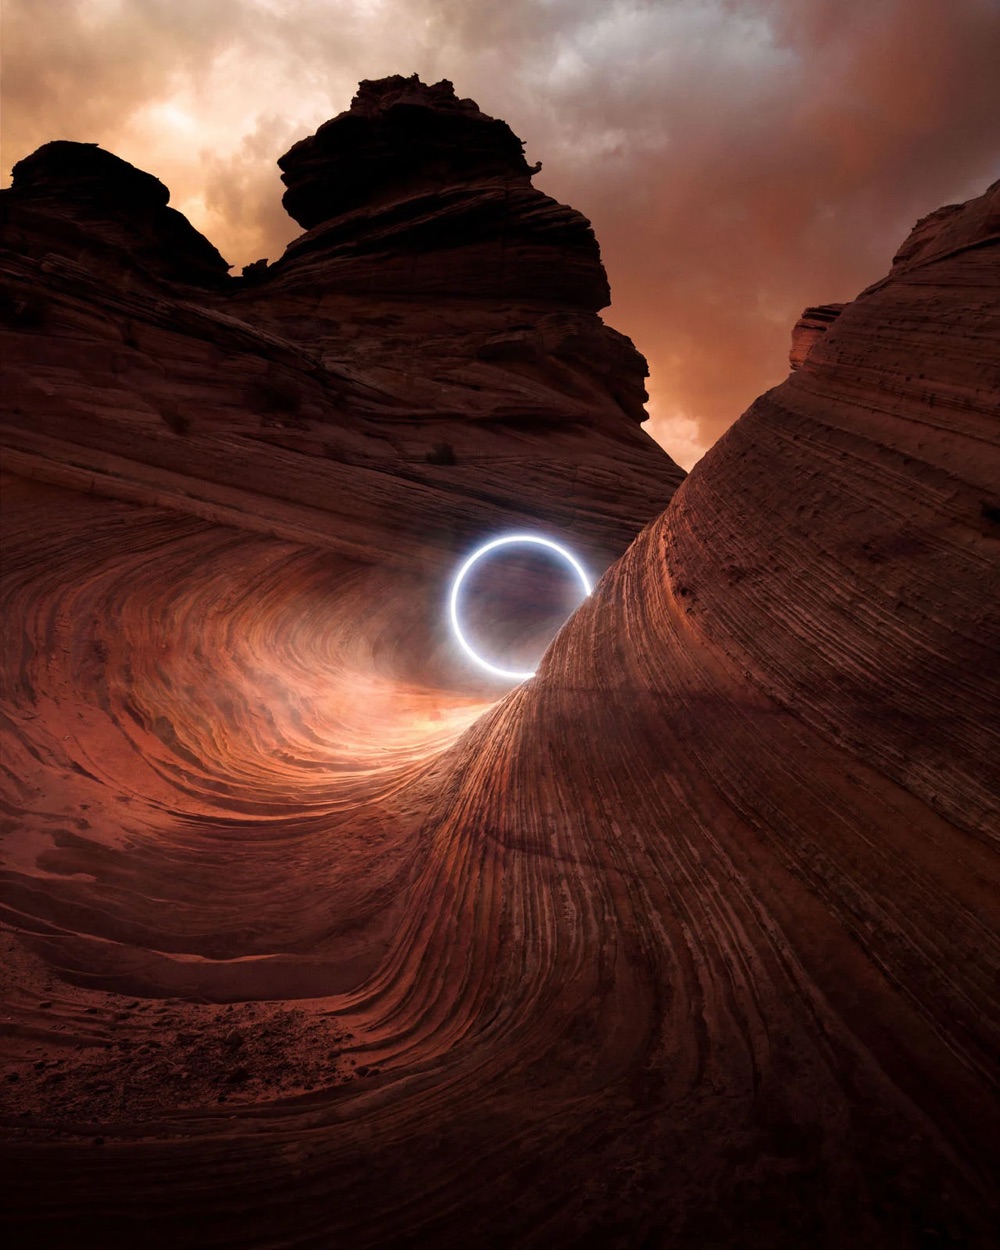 a glowing disk lights up a rocky landscape